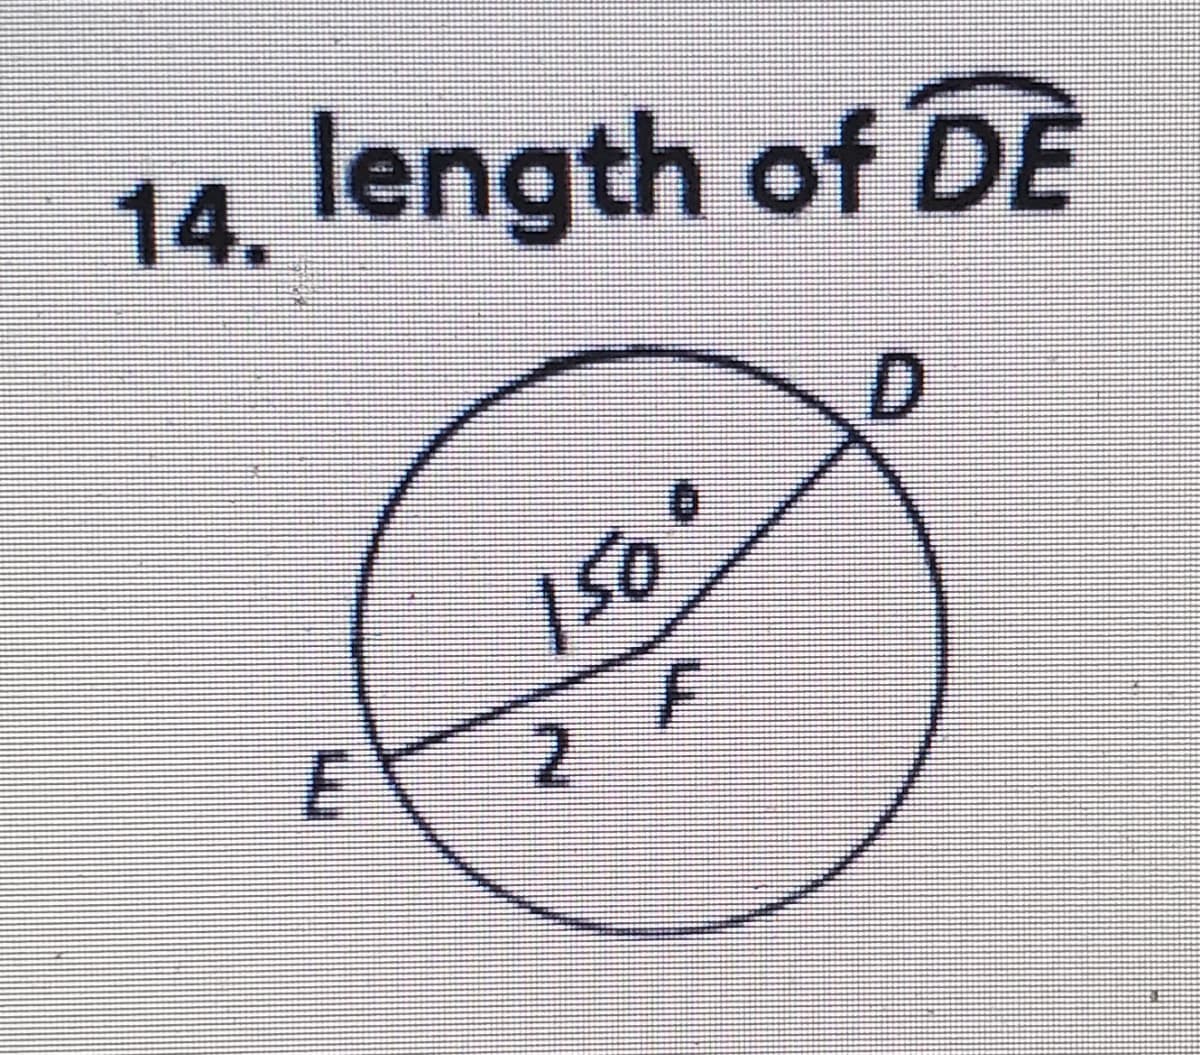 14. length of DE
D.
150°
